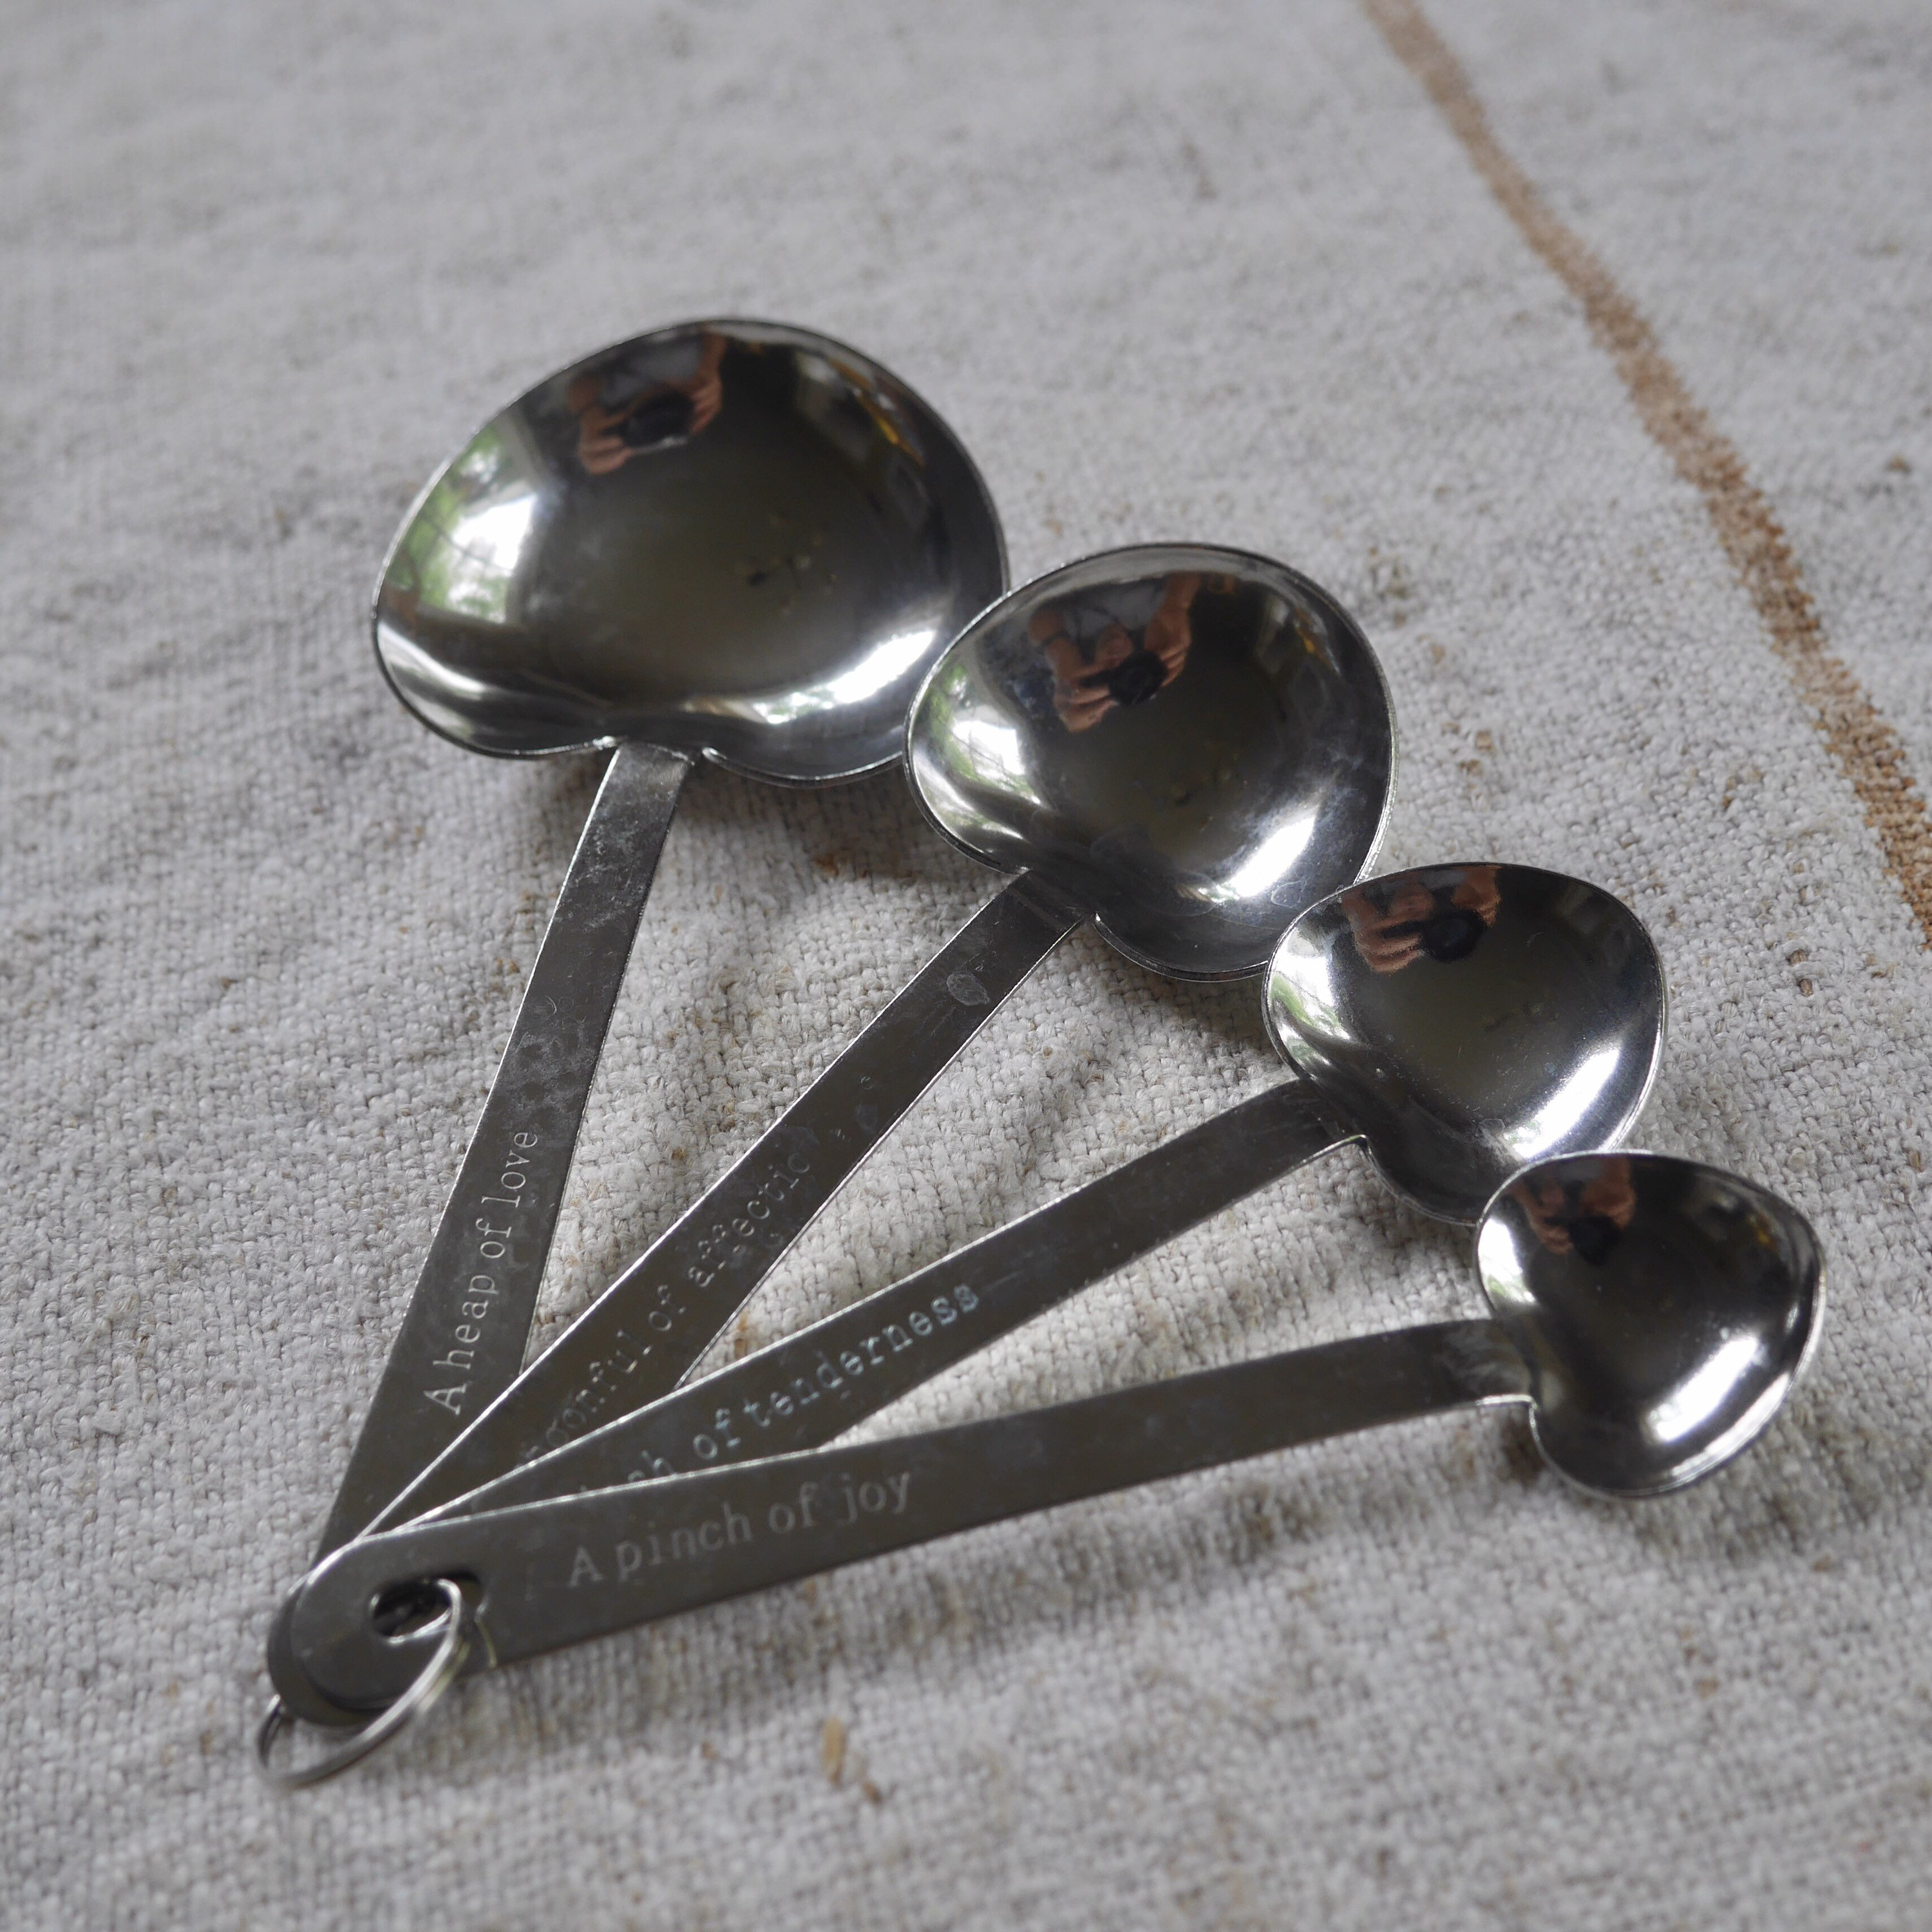 5Pcs Steel Mini Set Dash Pinch Smidgen Norpro Measuring Spoons-NEW